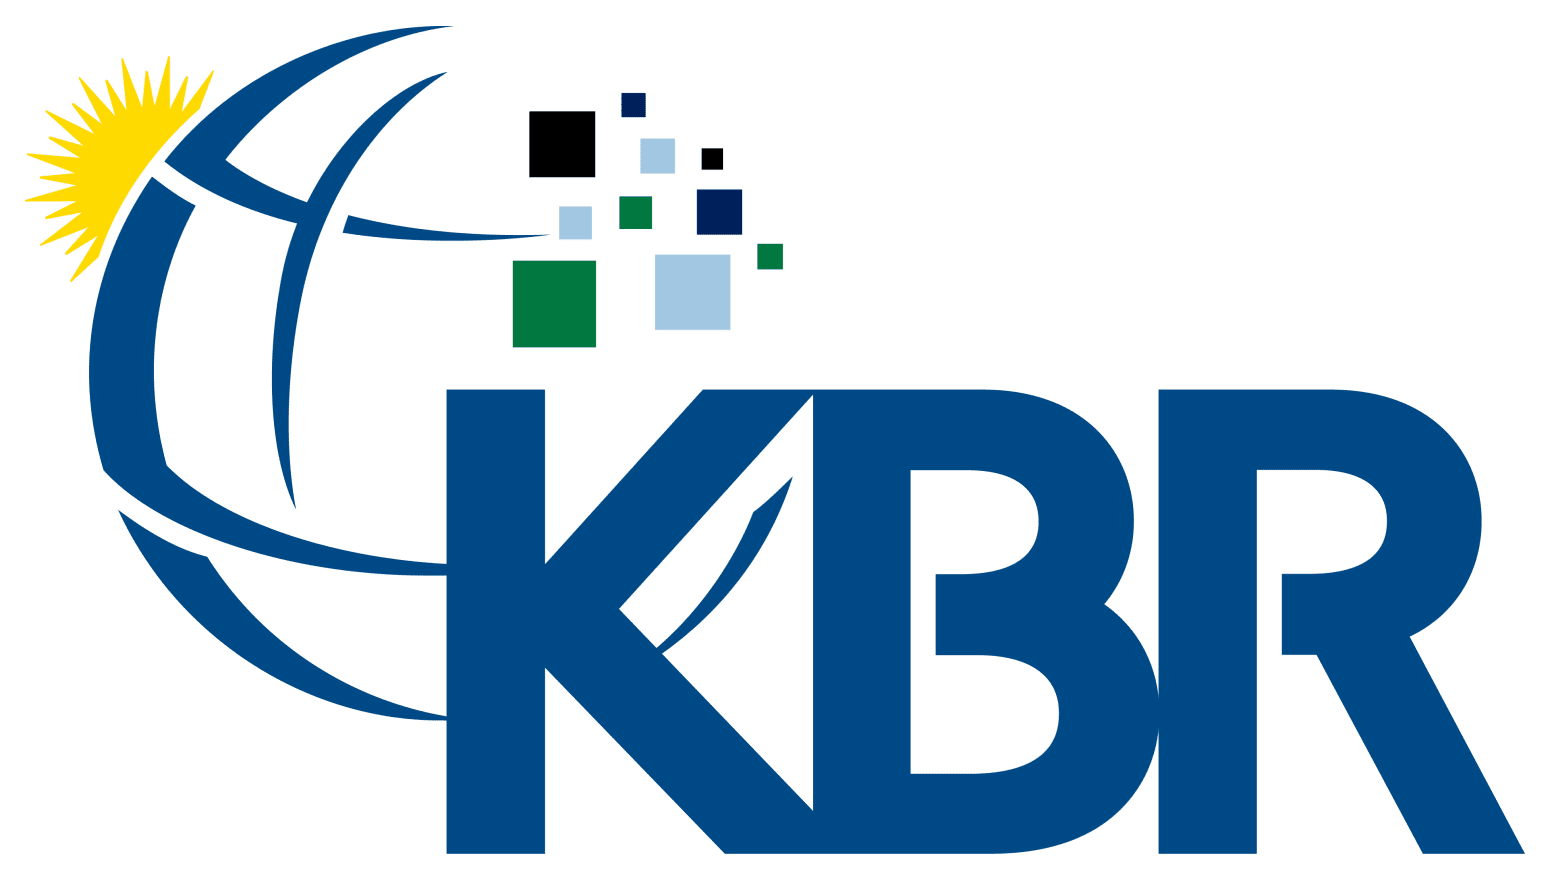 kbr-logo-freelogovectors.net_